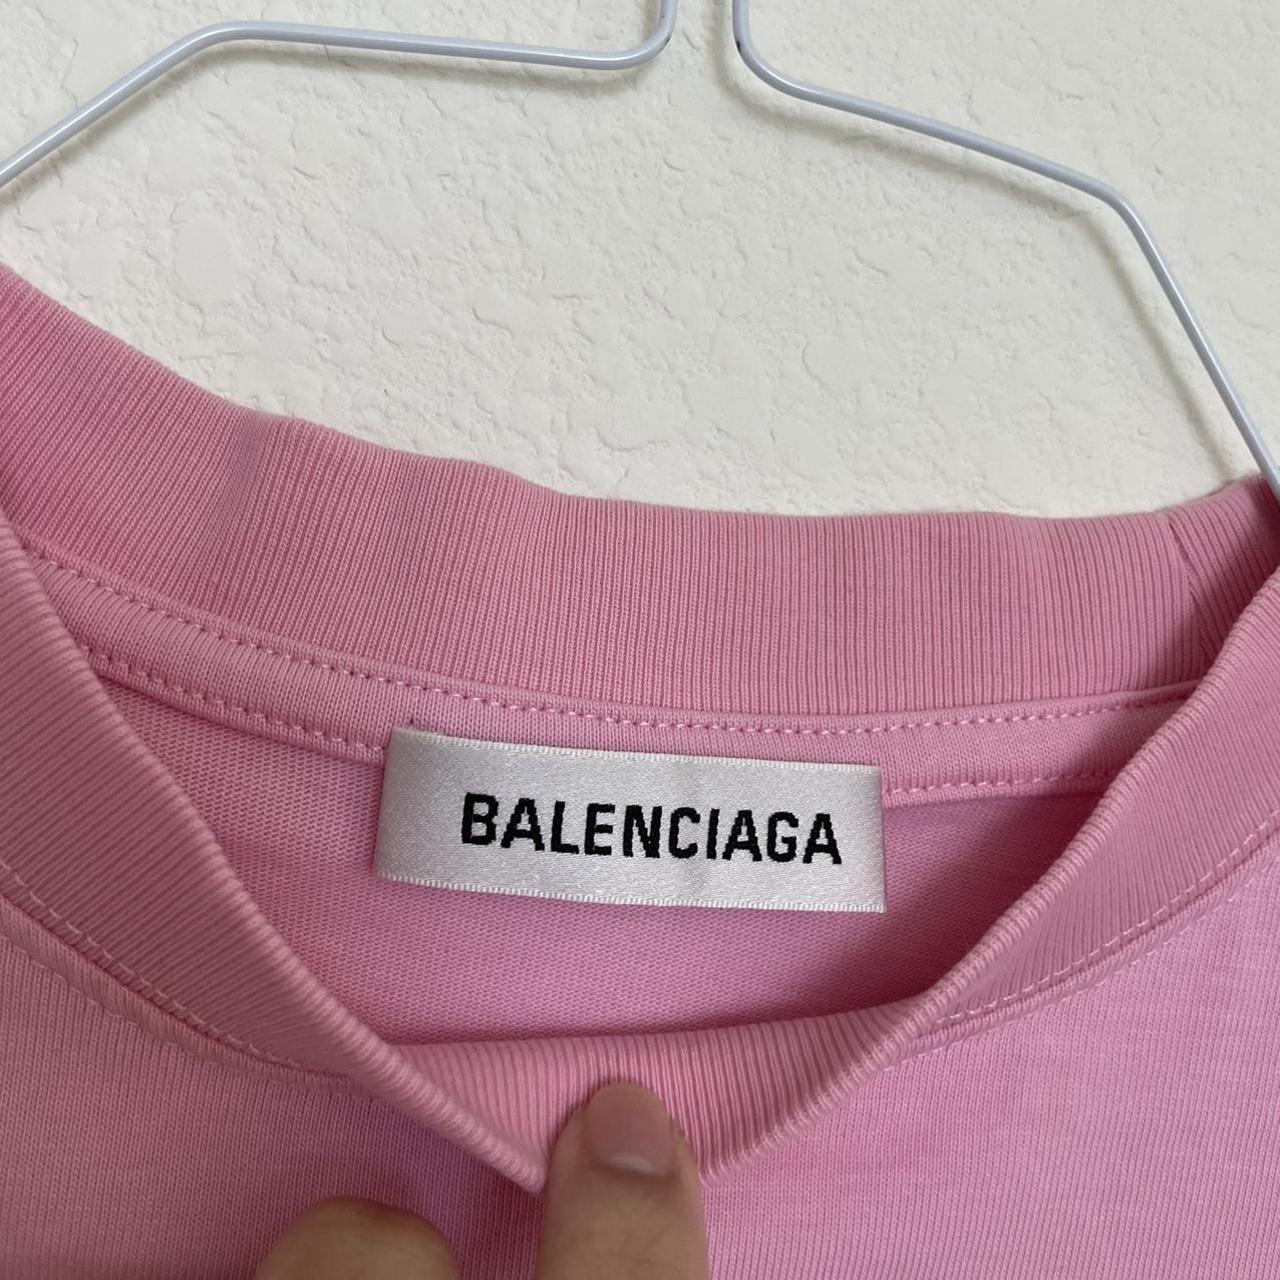 Product Image 3 - Authentic Balenciaga Pink Oversized T-Shirt

✓